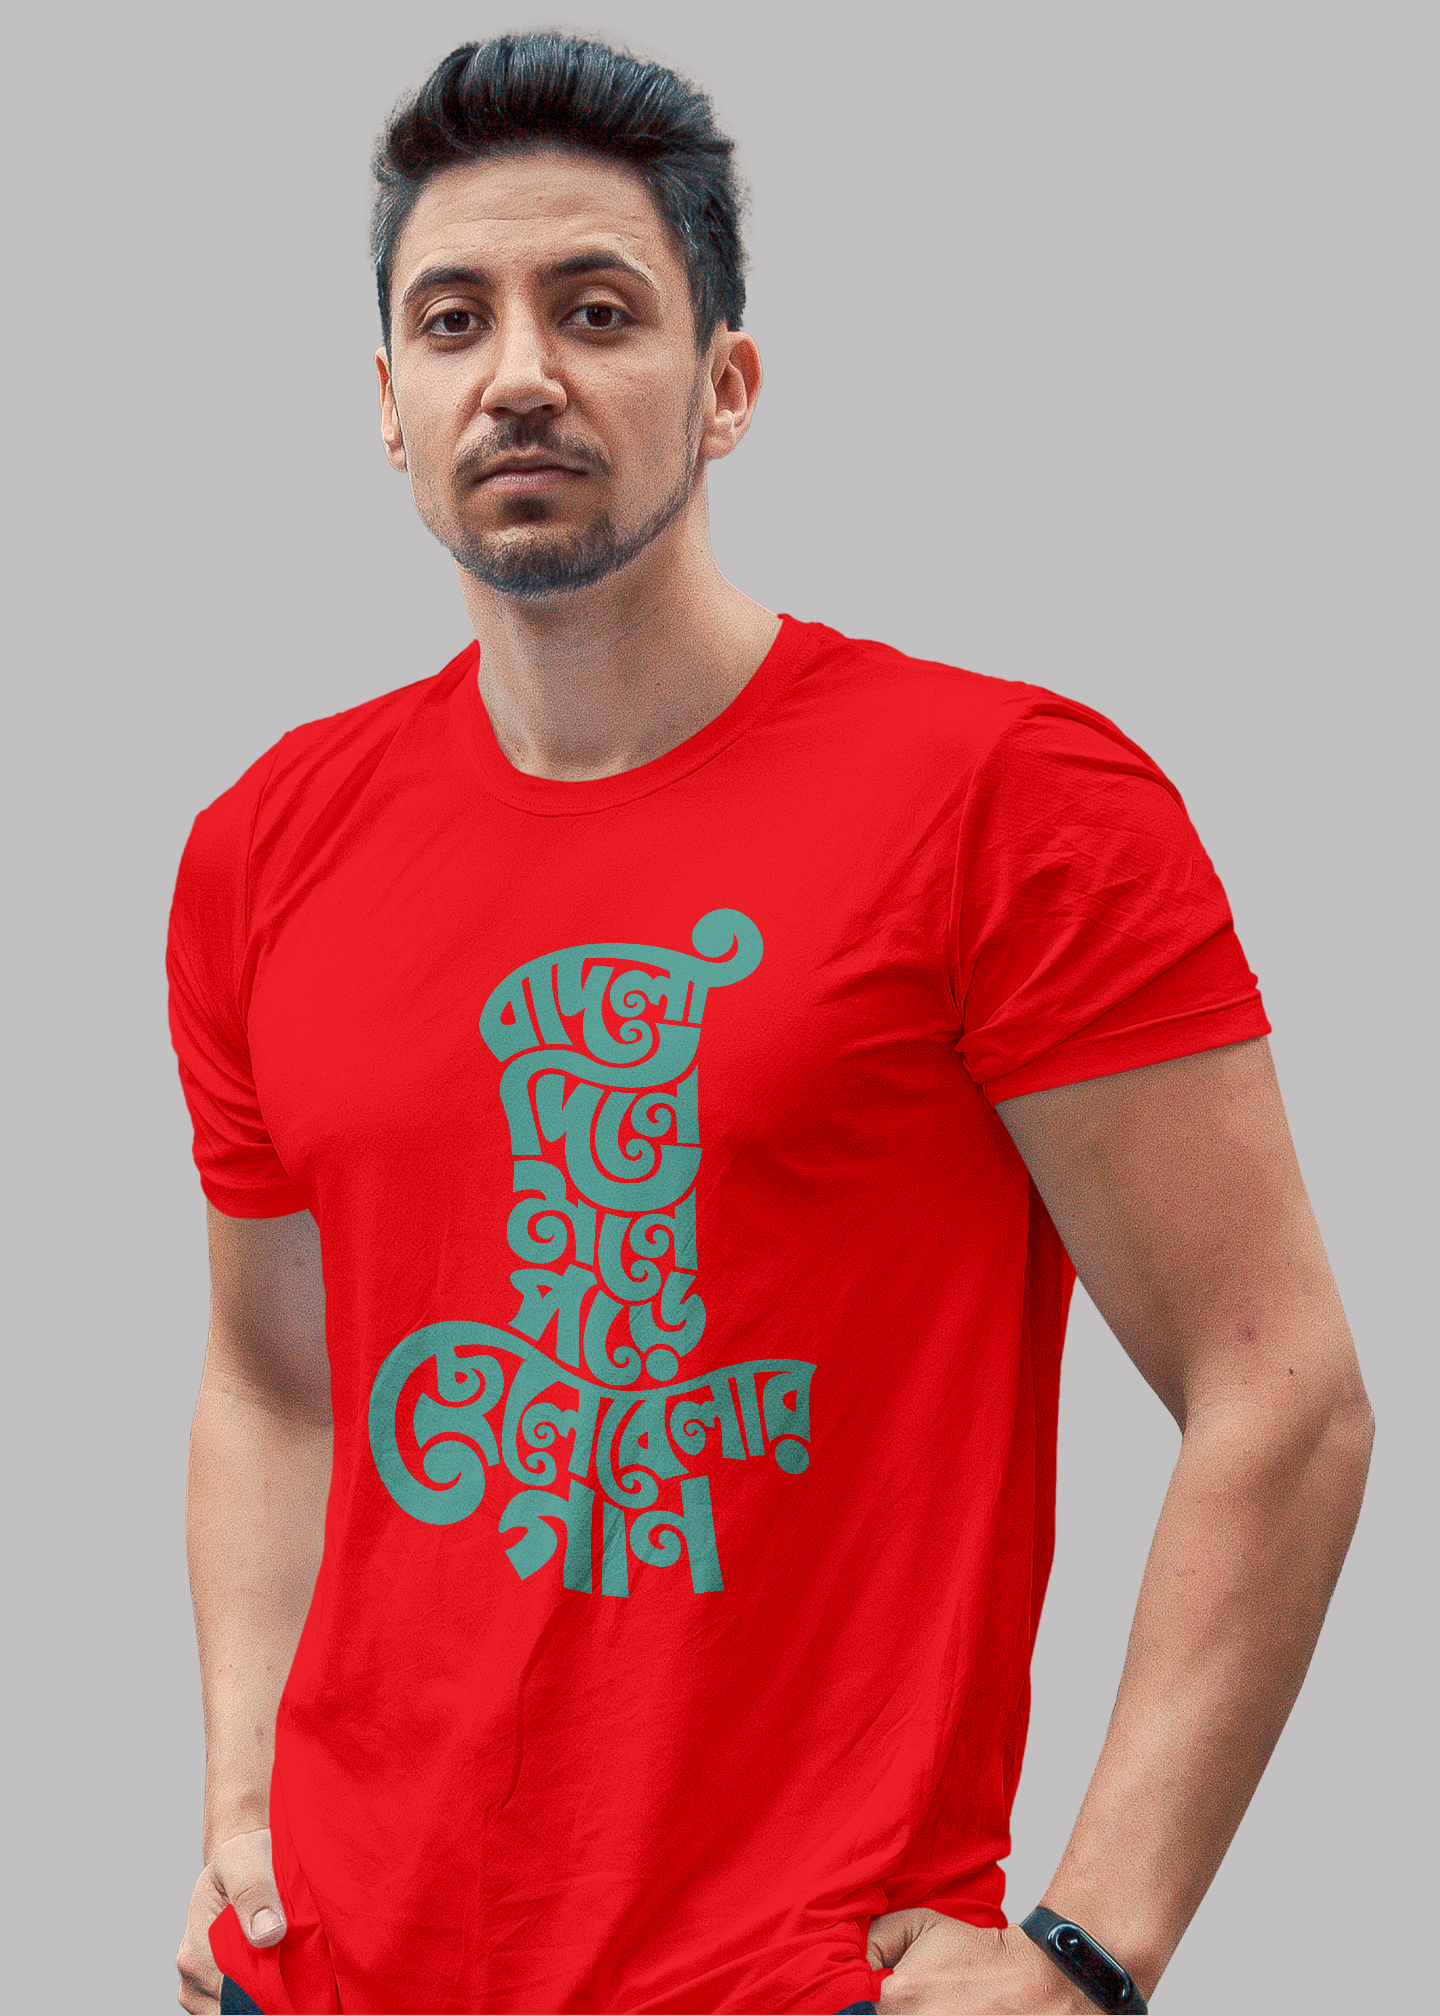 Badla dine mone pore chele belar gaan bengali Printed Half Sleeve Premium Cotton T-shirt For Men